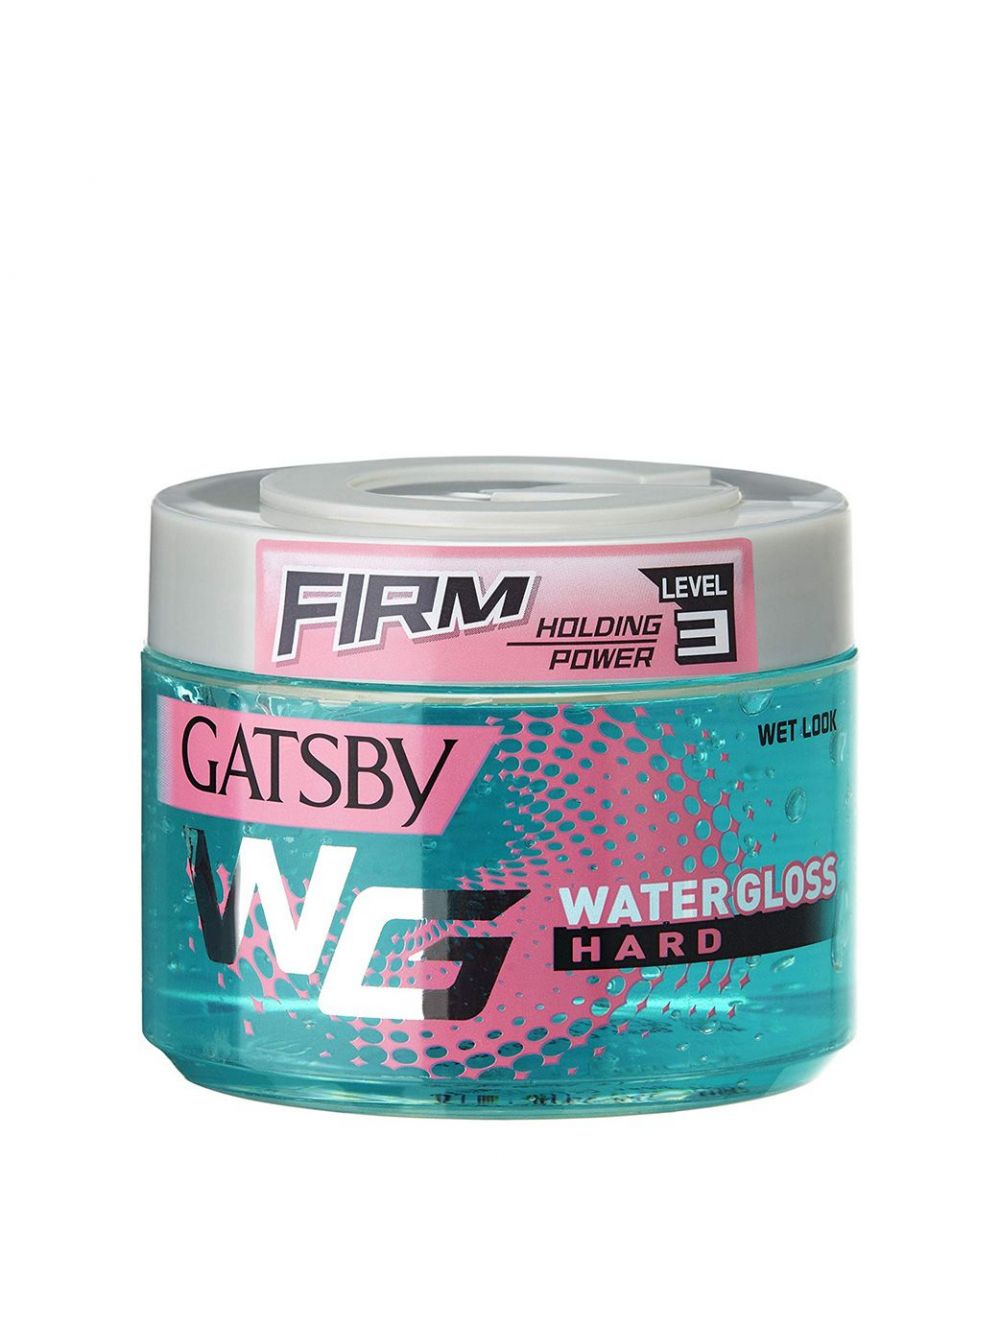 Gatsby Water Gloss - Hard (300gm) - Niram